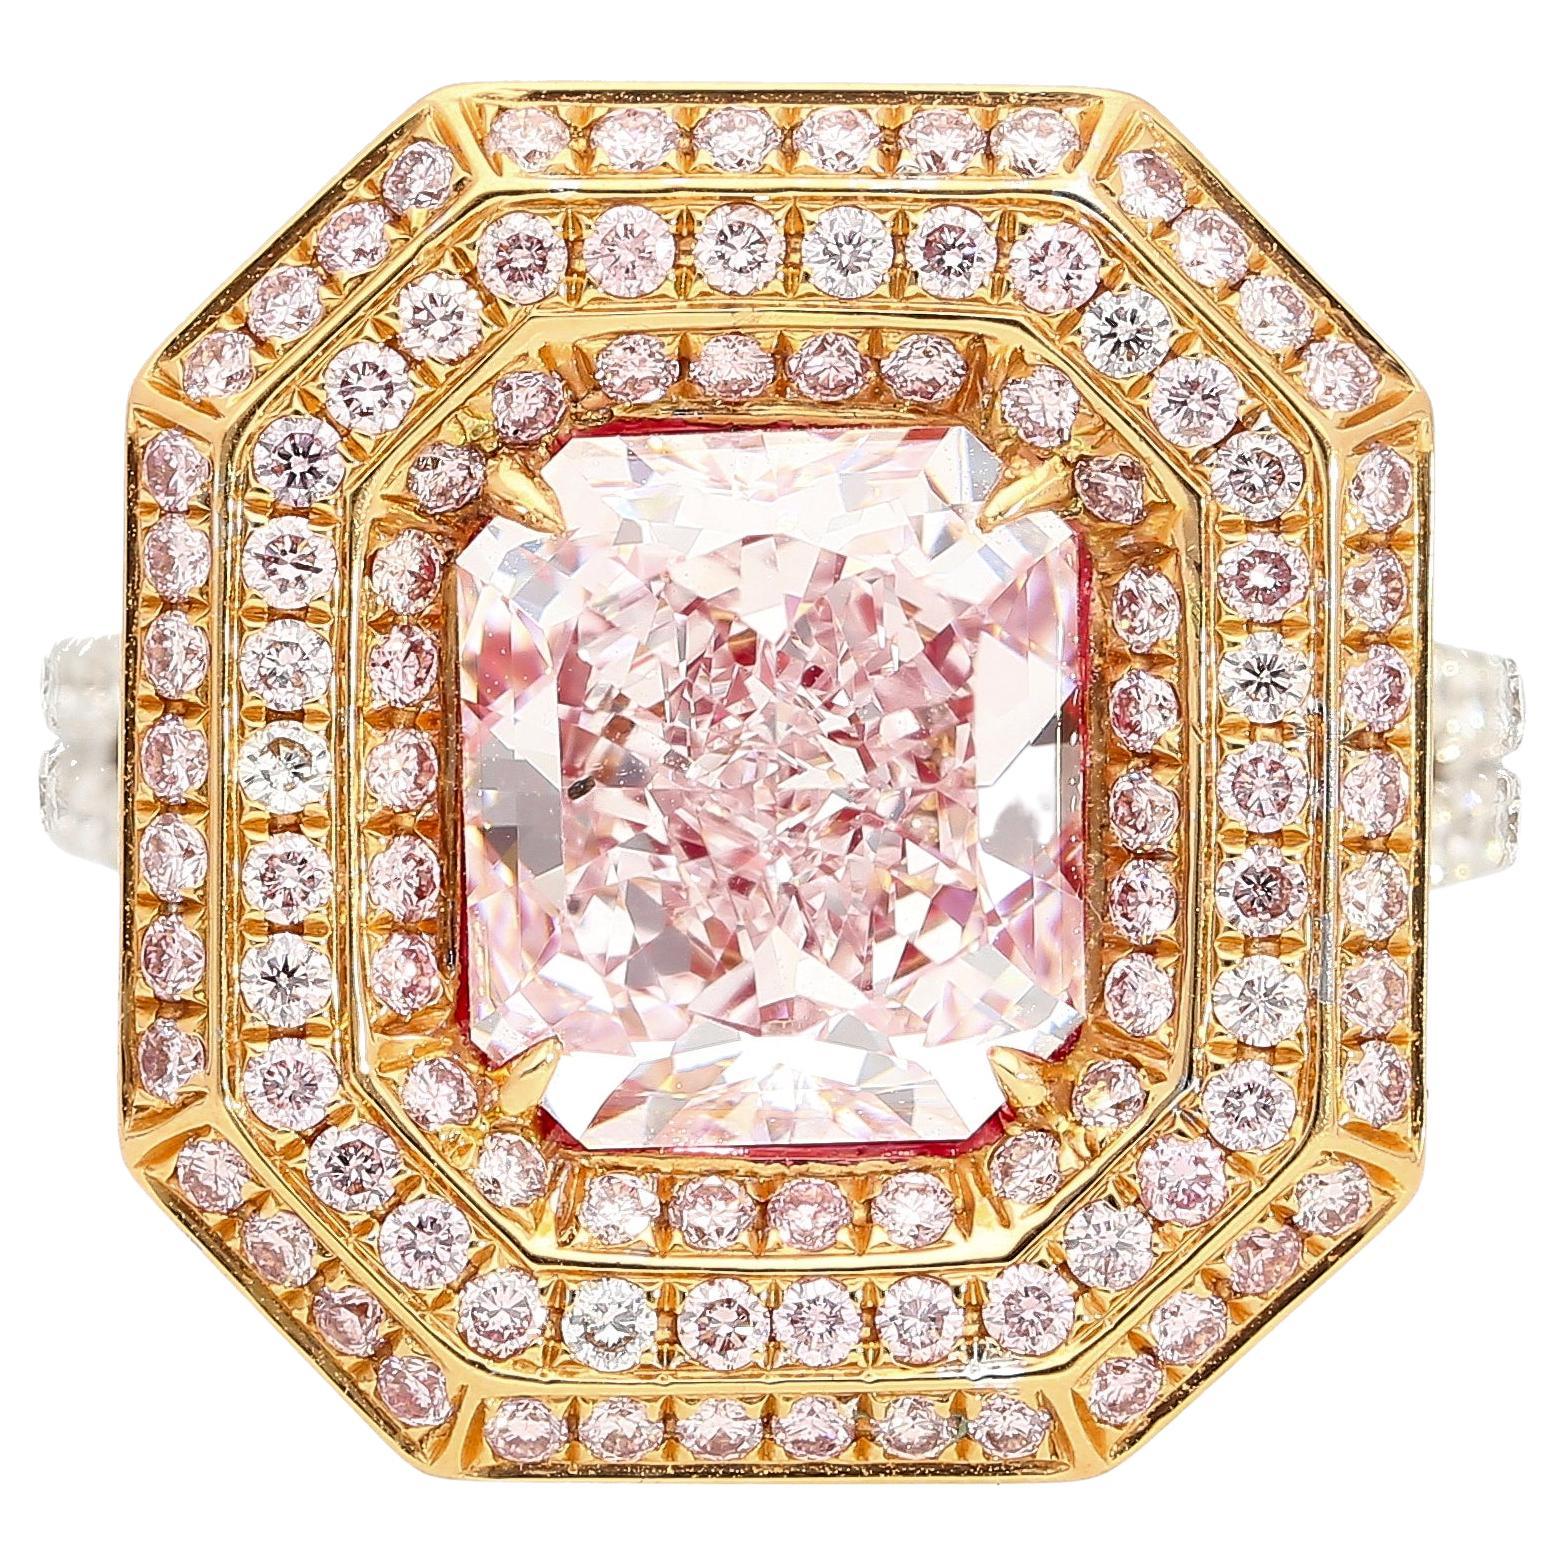 GIA Certified 3.48 Carat Radiant Cut Fancy Light Pink Diamond Ring in 18k 